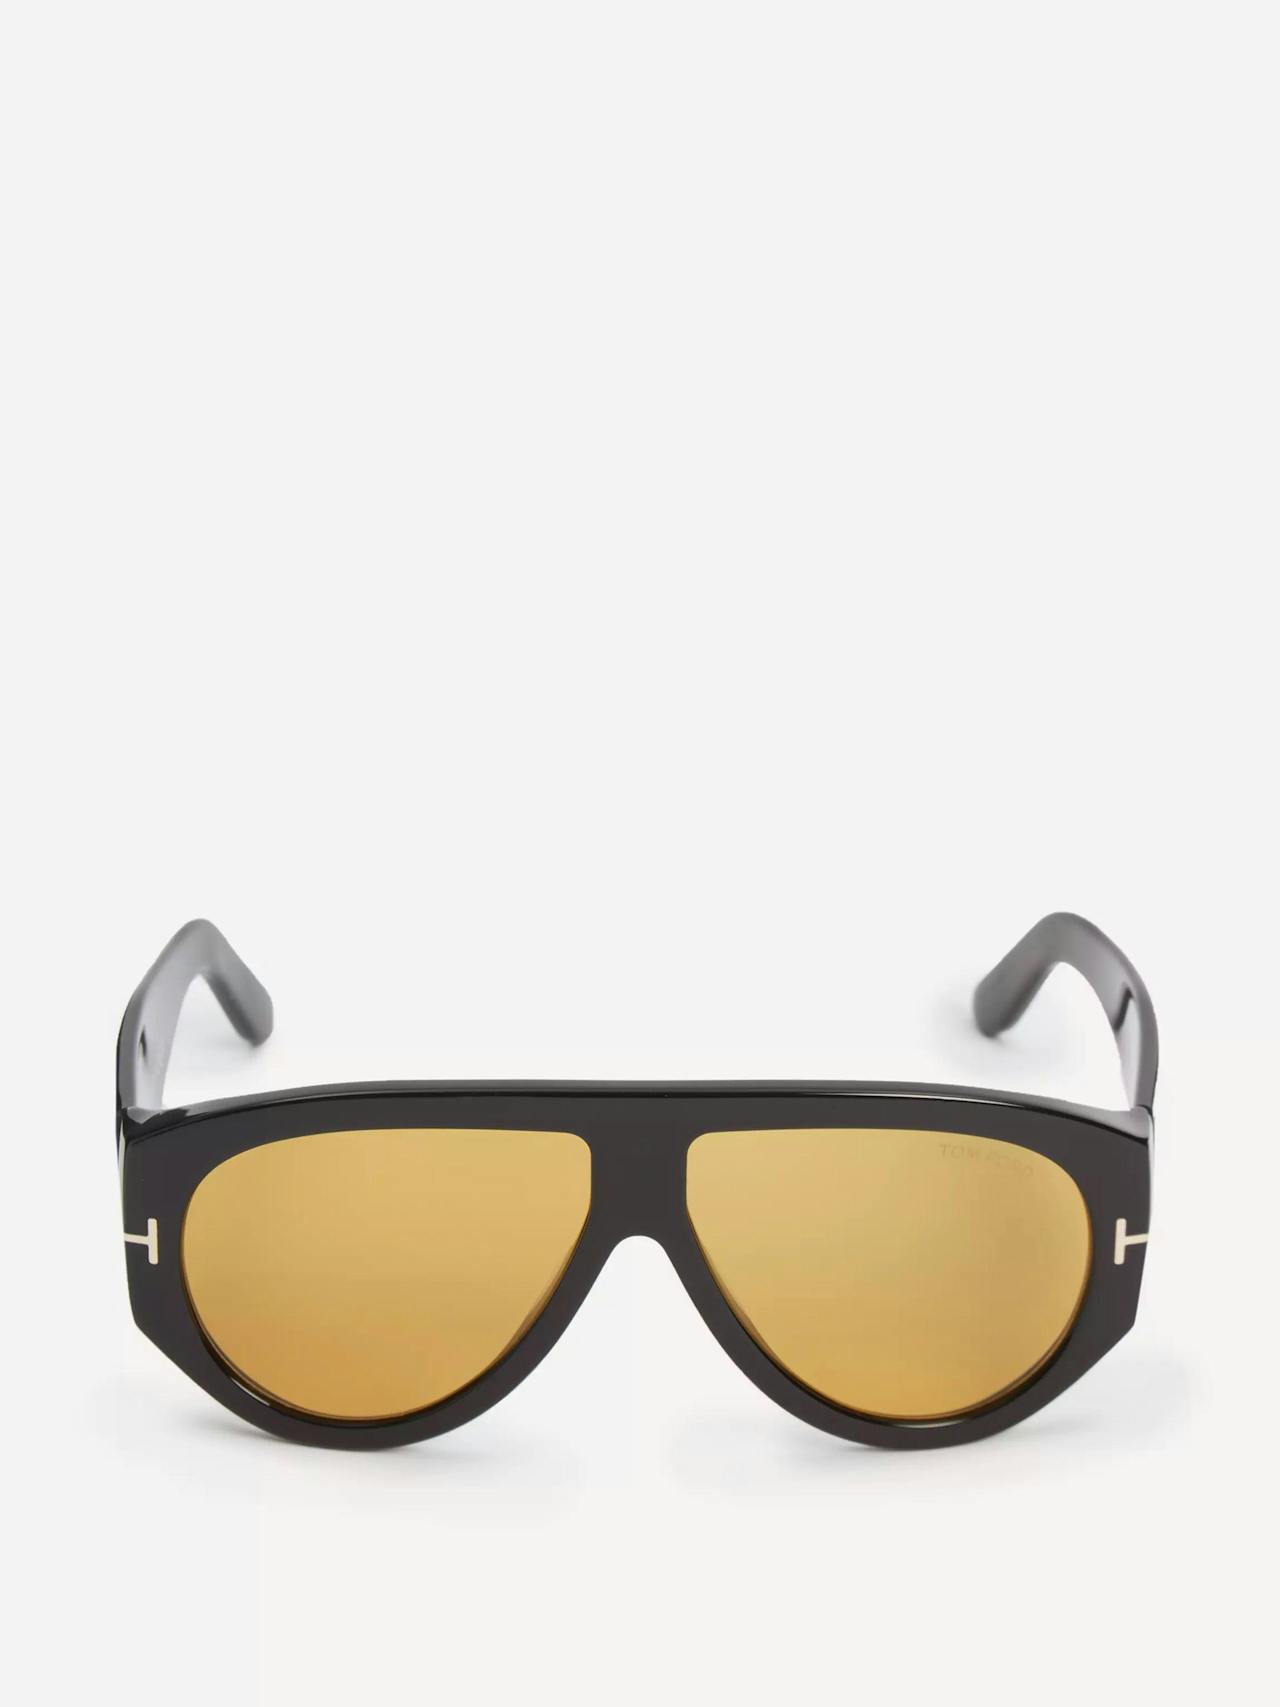 Bronson aviator sunglasses